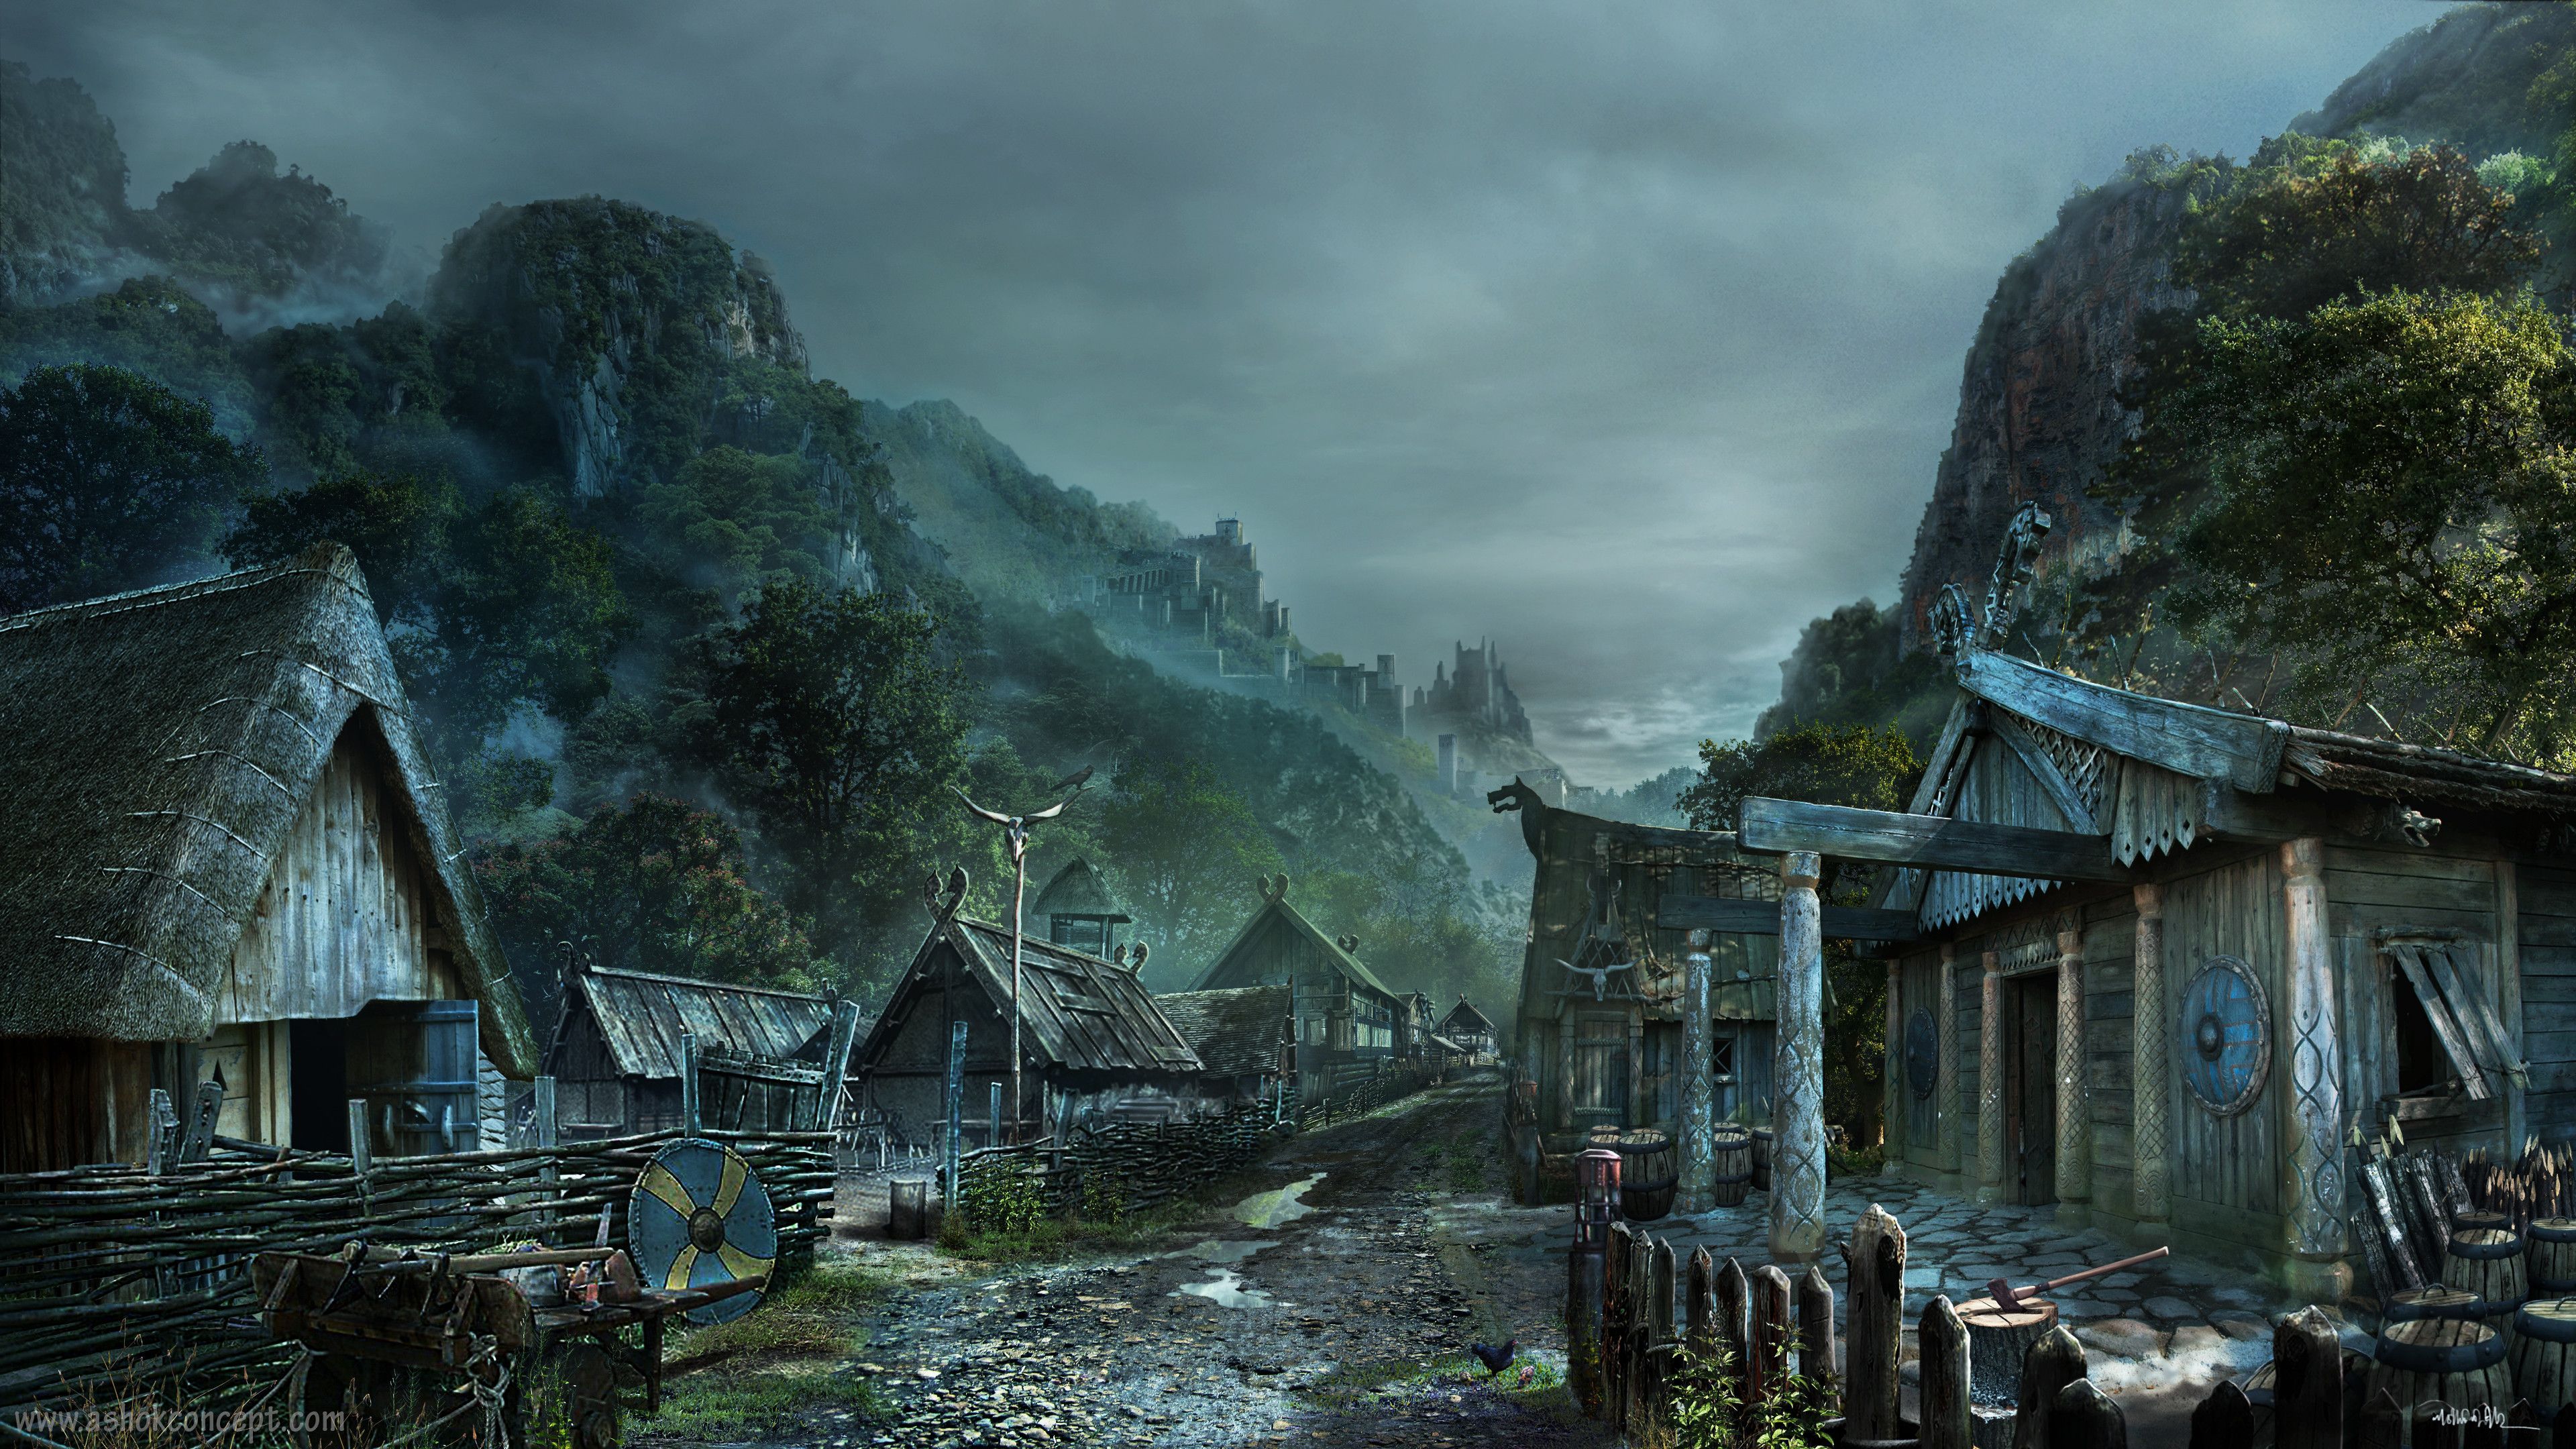 Dump of 50 wallpaper background. (All 4K and no watermarks). Viking village, Fantasy village, Fantasy landscape